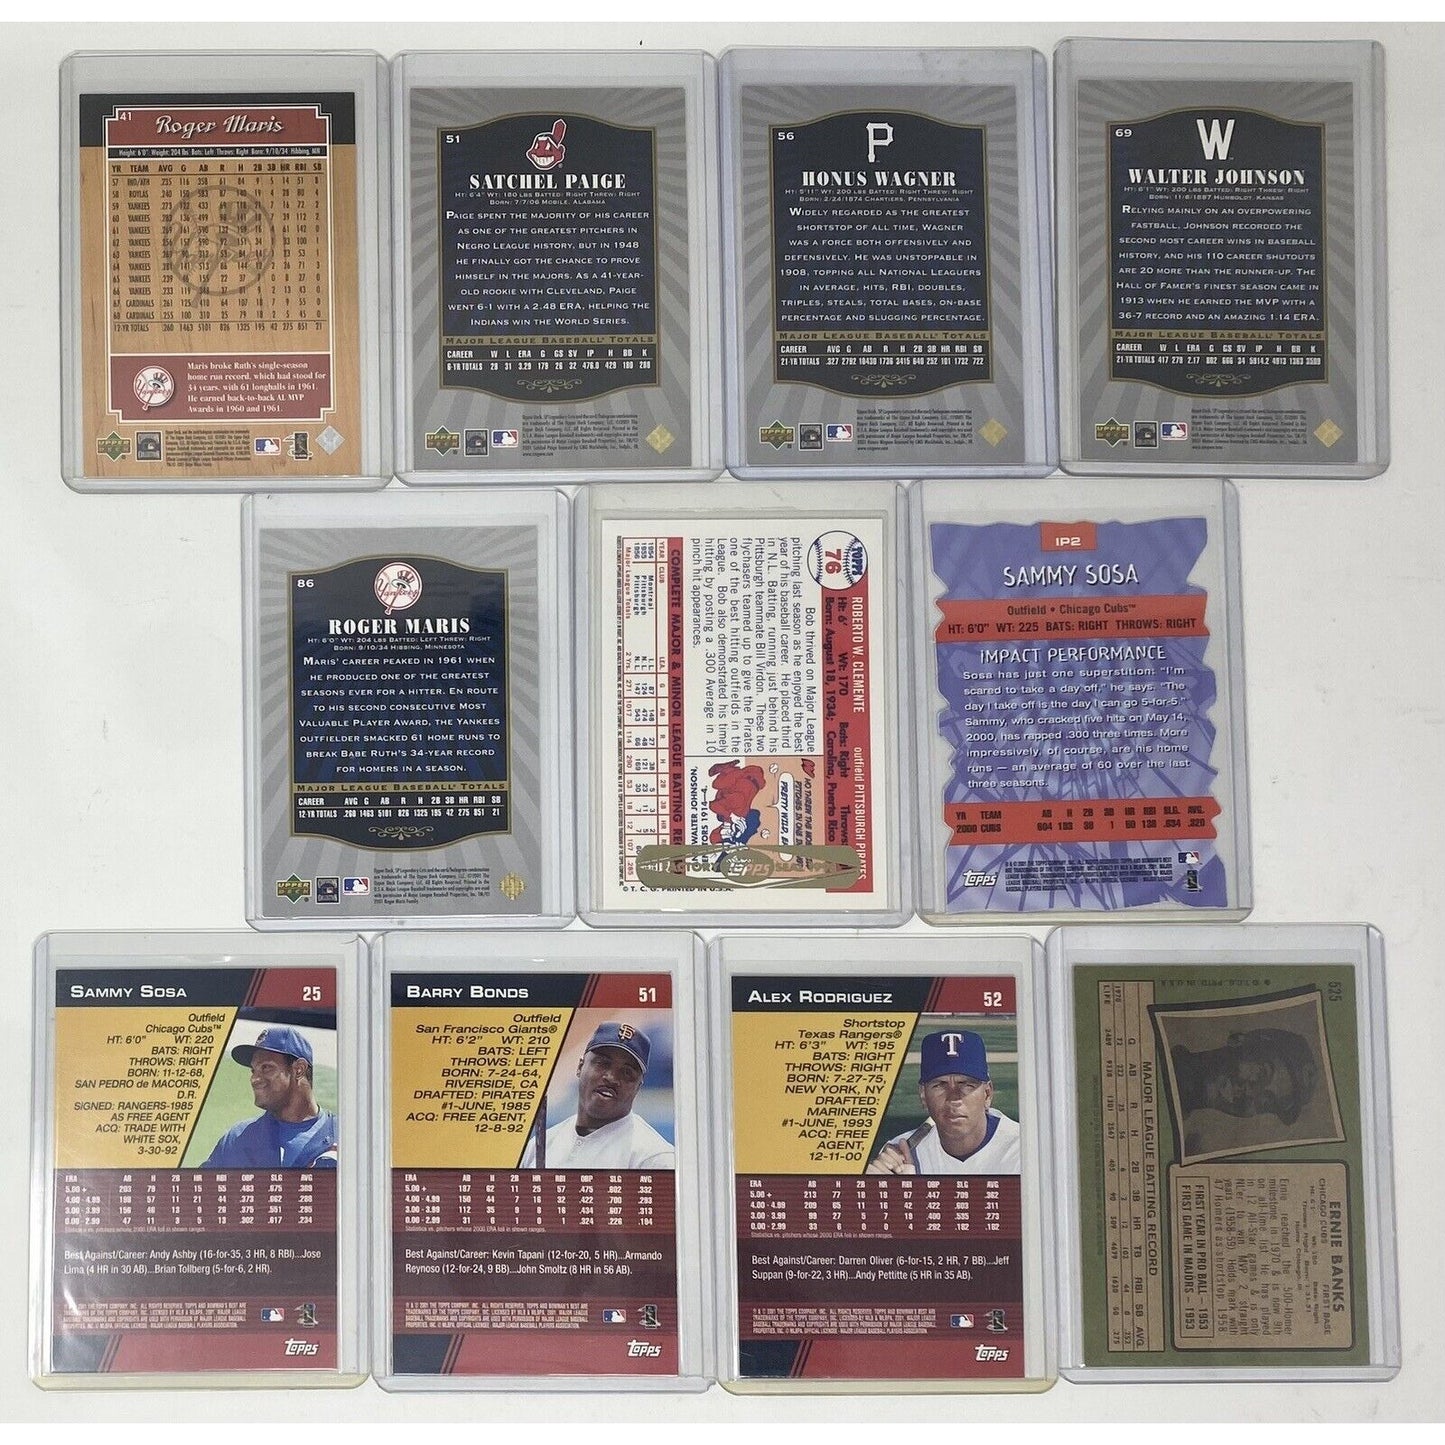 Mixed Lot of 32 Banks, DiMaggio, Ripken, Clemens + More MLB Baseball Cards